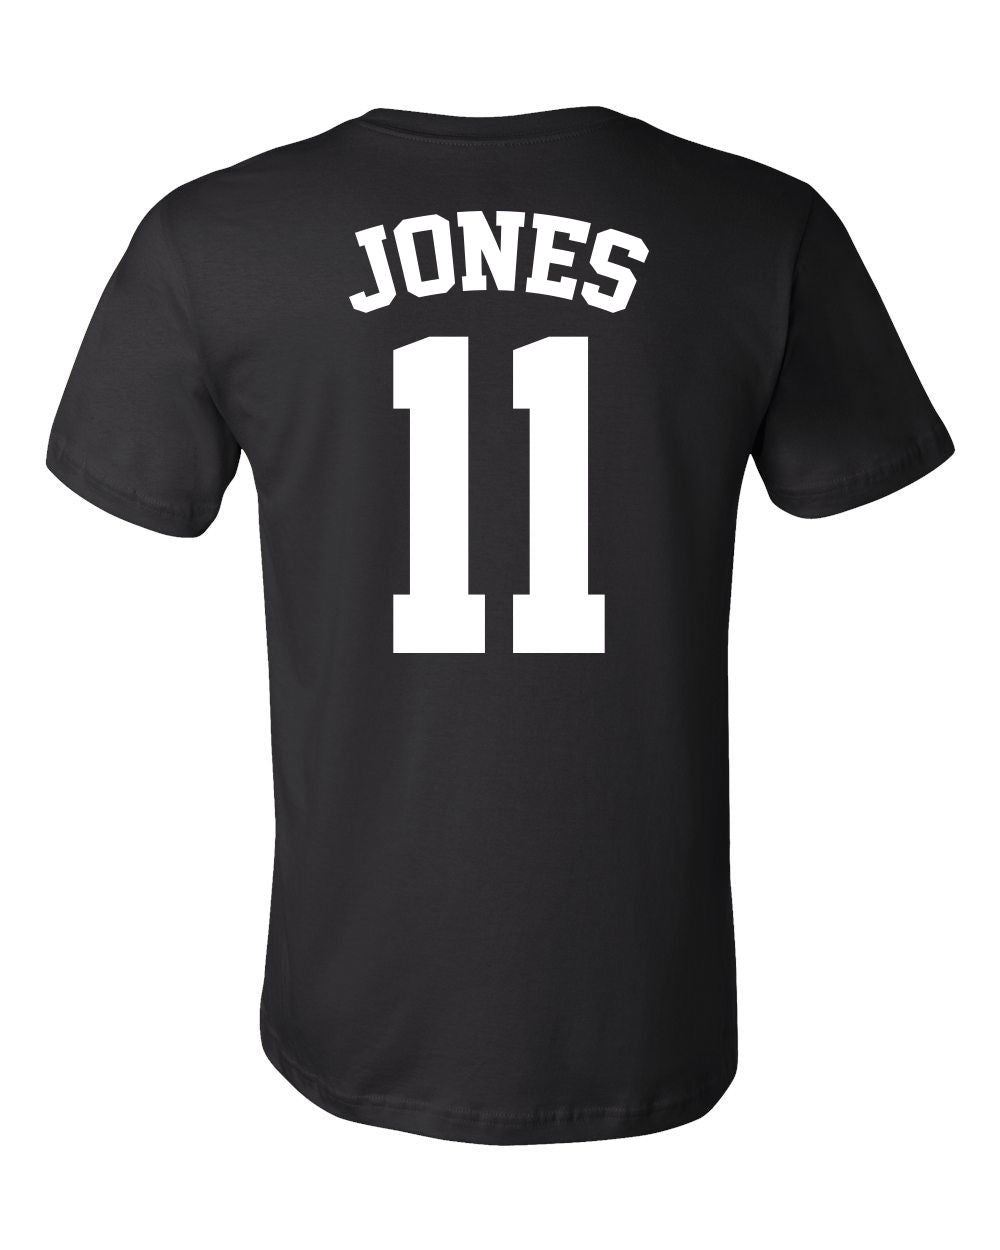 Julio Jones #11 Atlanta Falcons Jersey player shirt